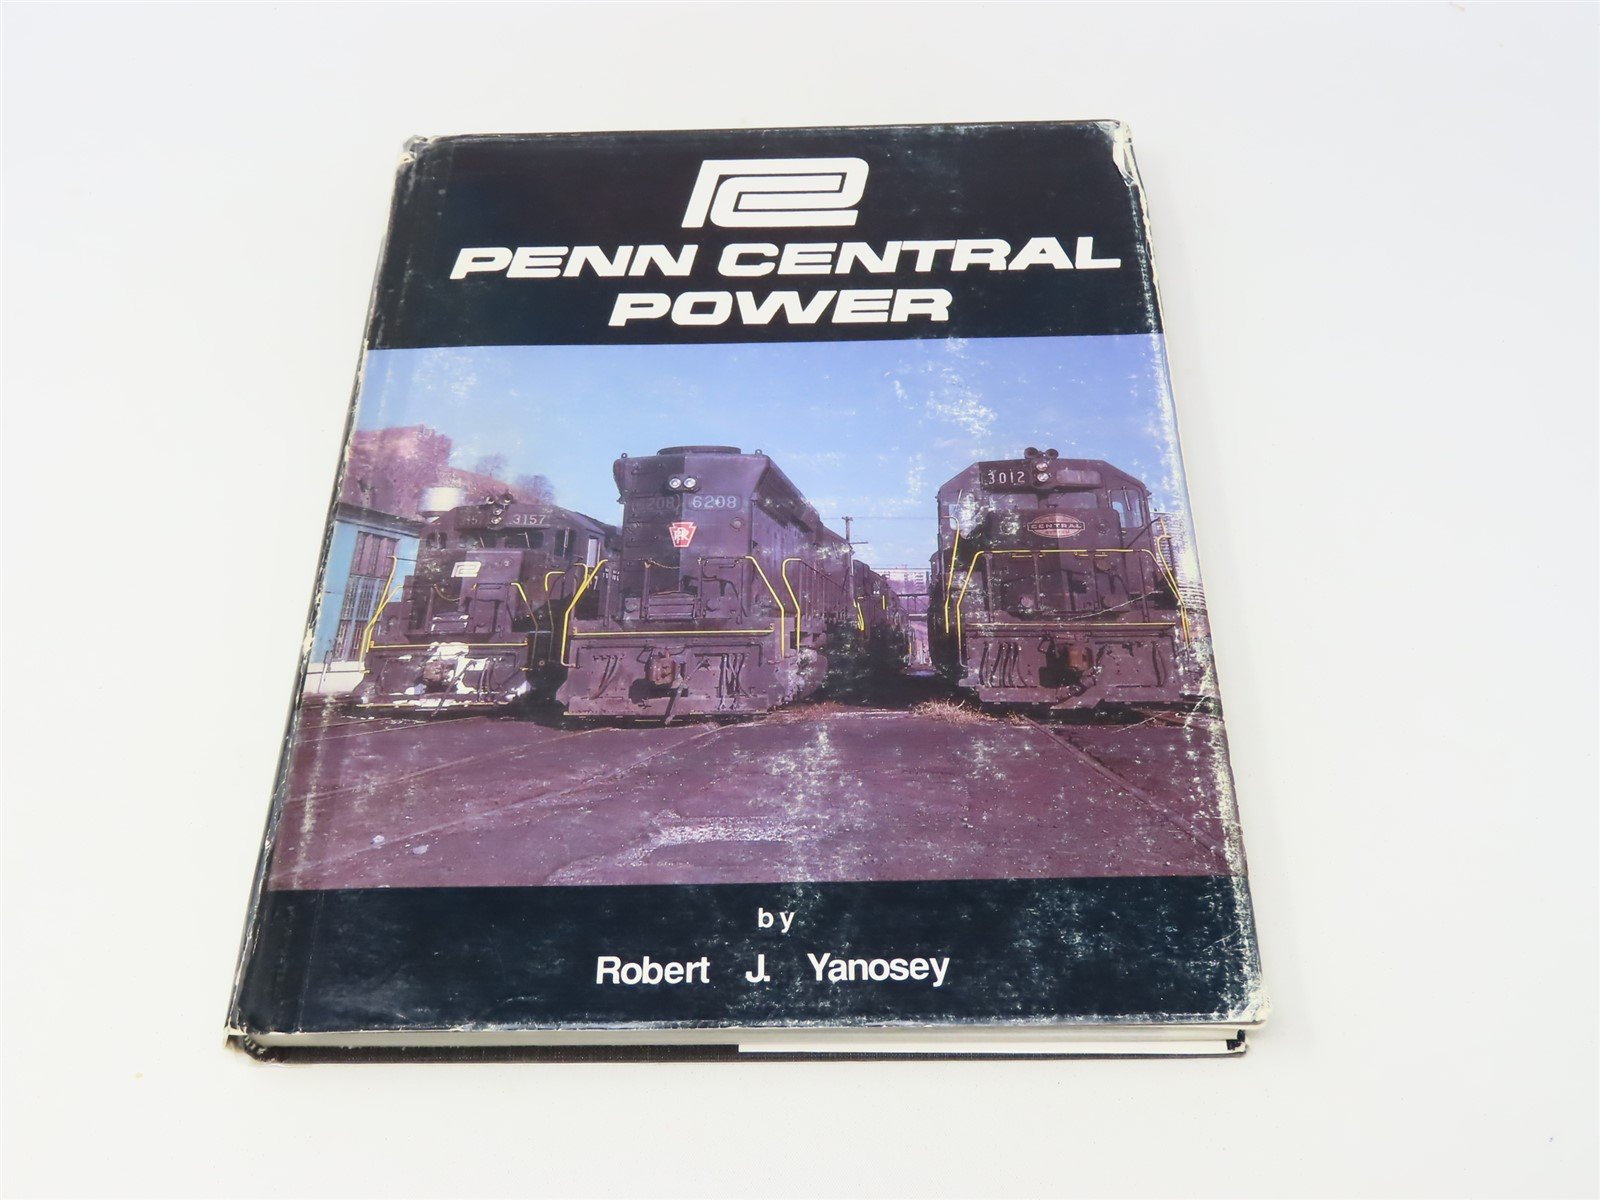 Morning Sun-Penn Central Power First Edition by Robert J. Yanosey ©1987 HC Book